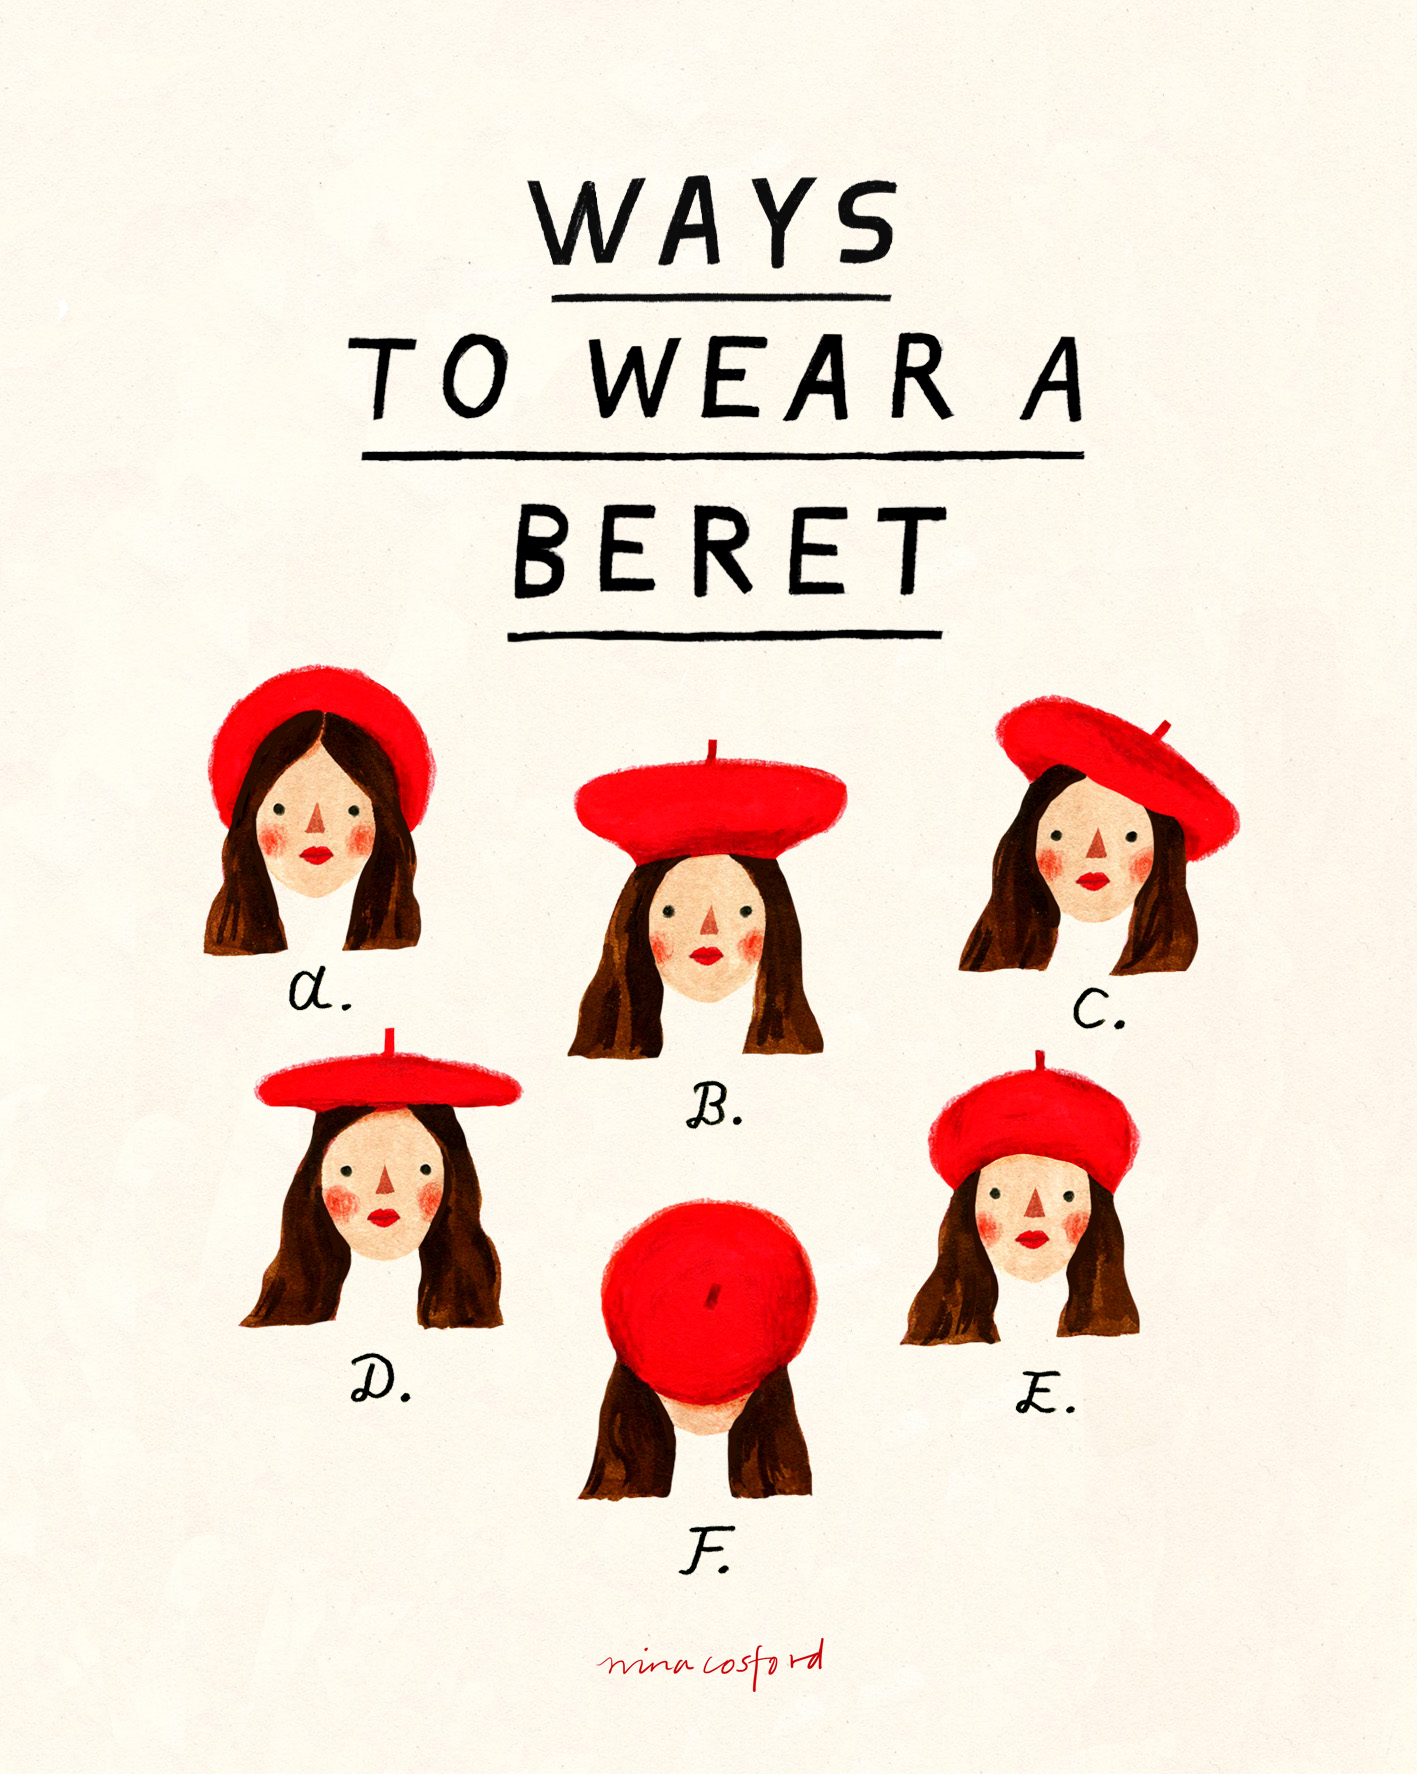 Nina Cosford Illustration - berets